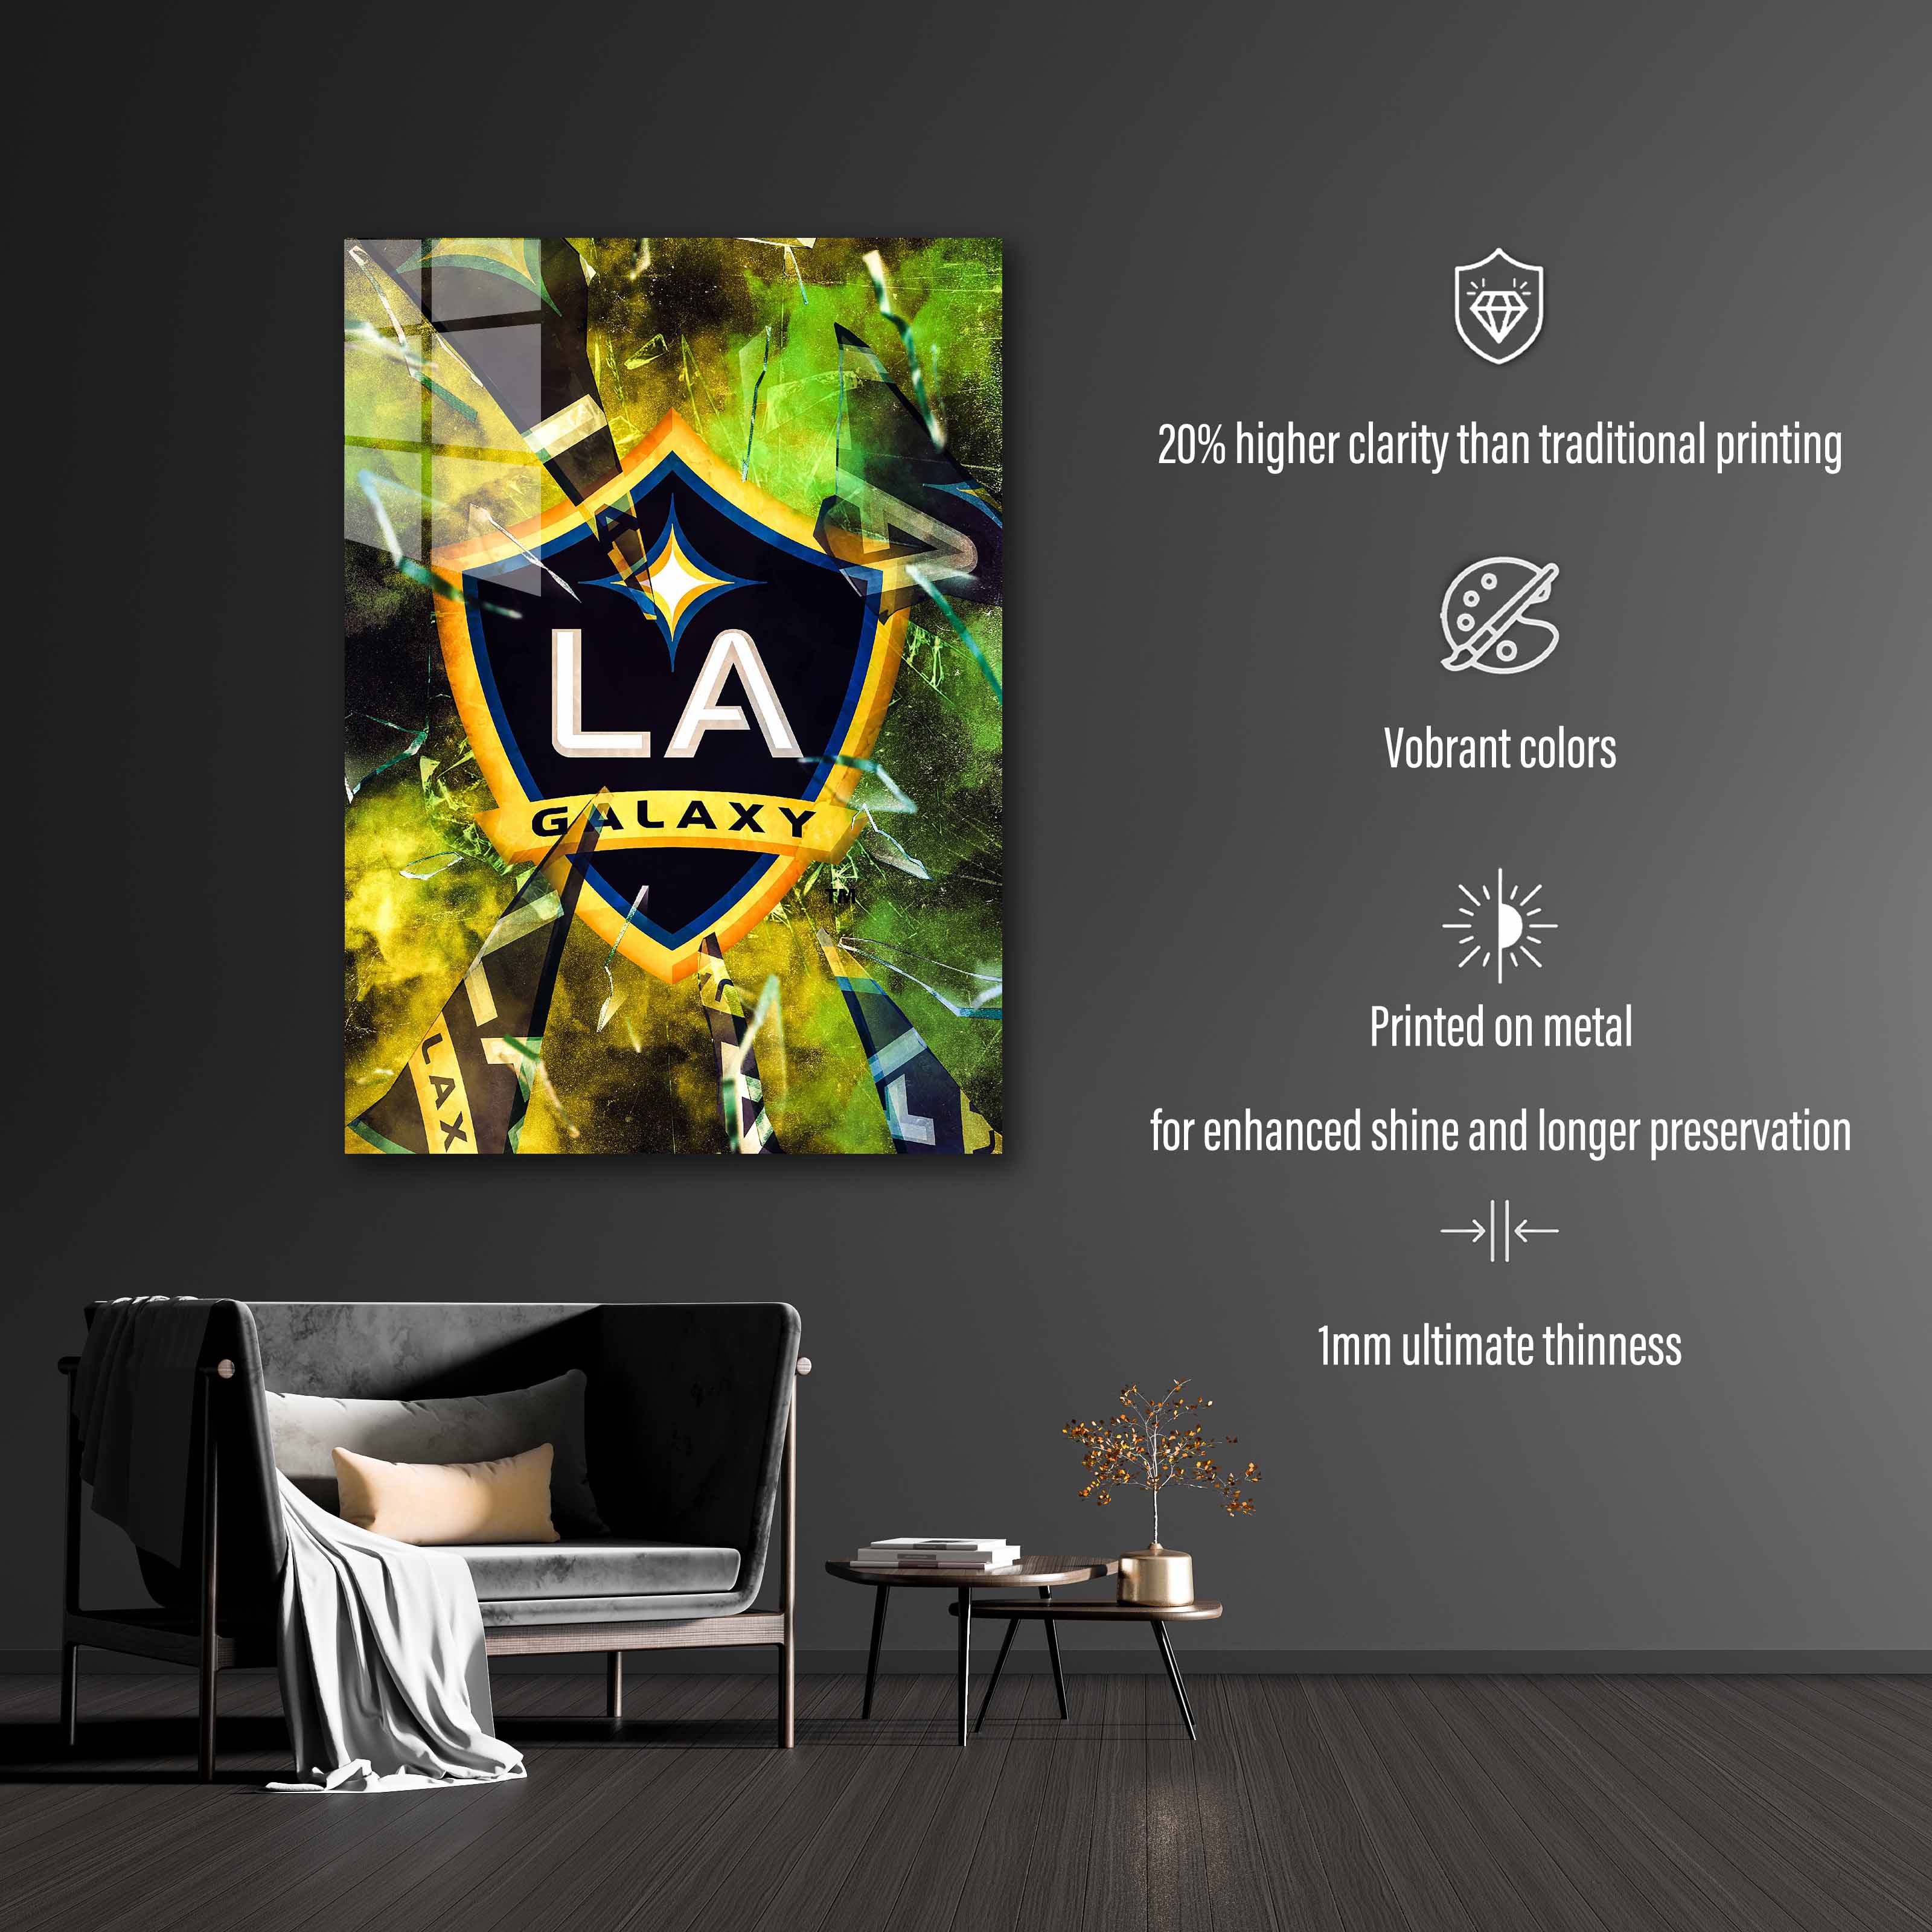 LA Galaxy poster